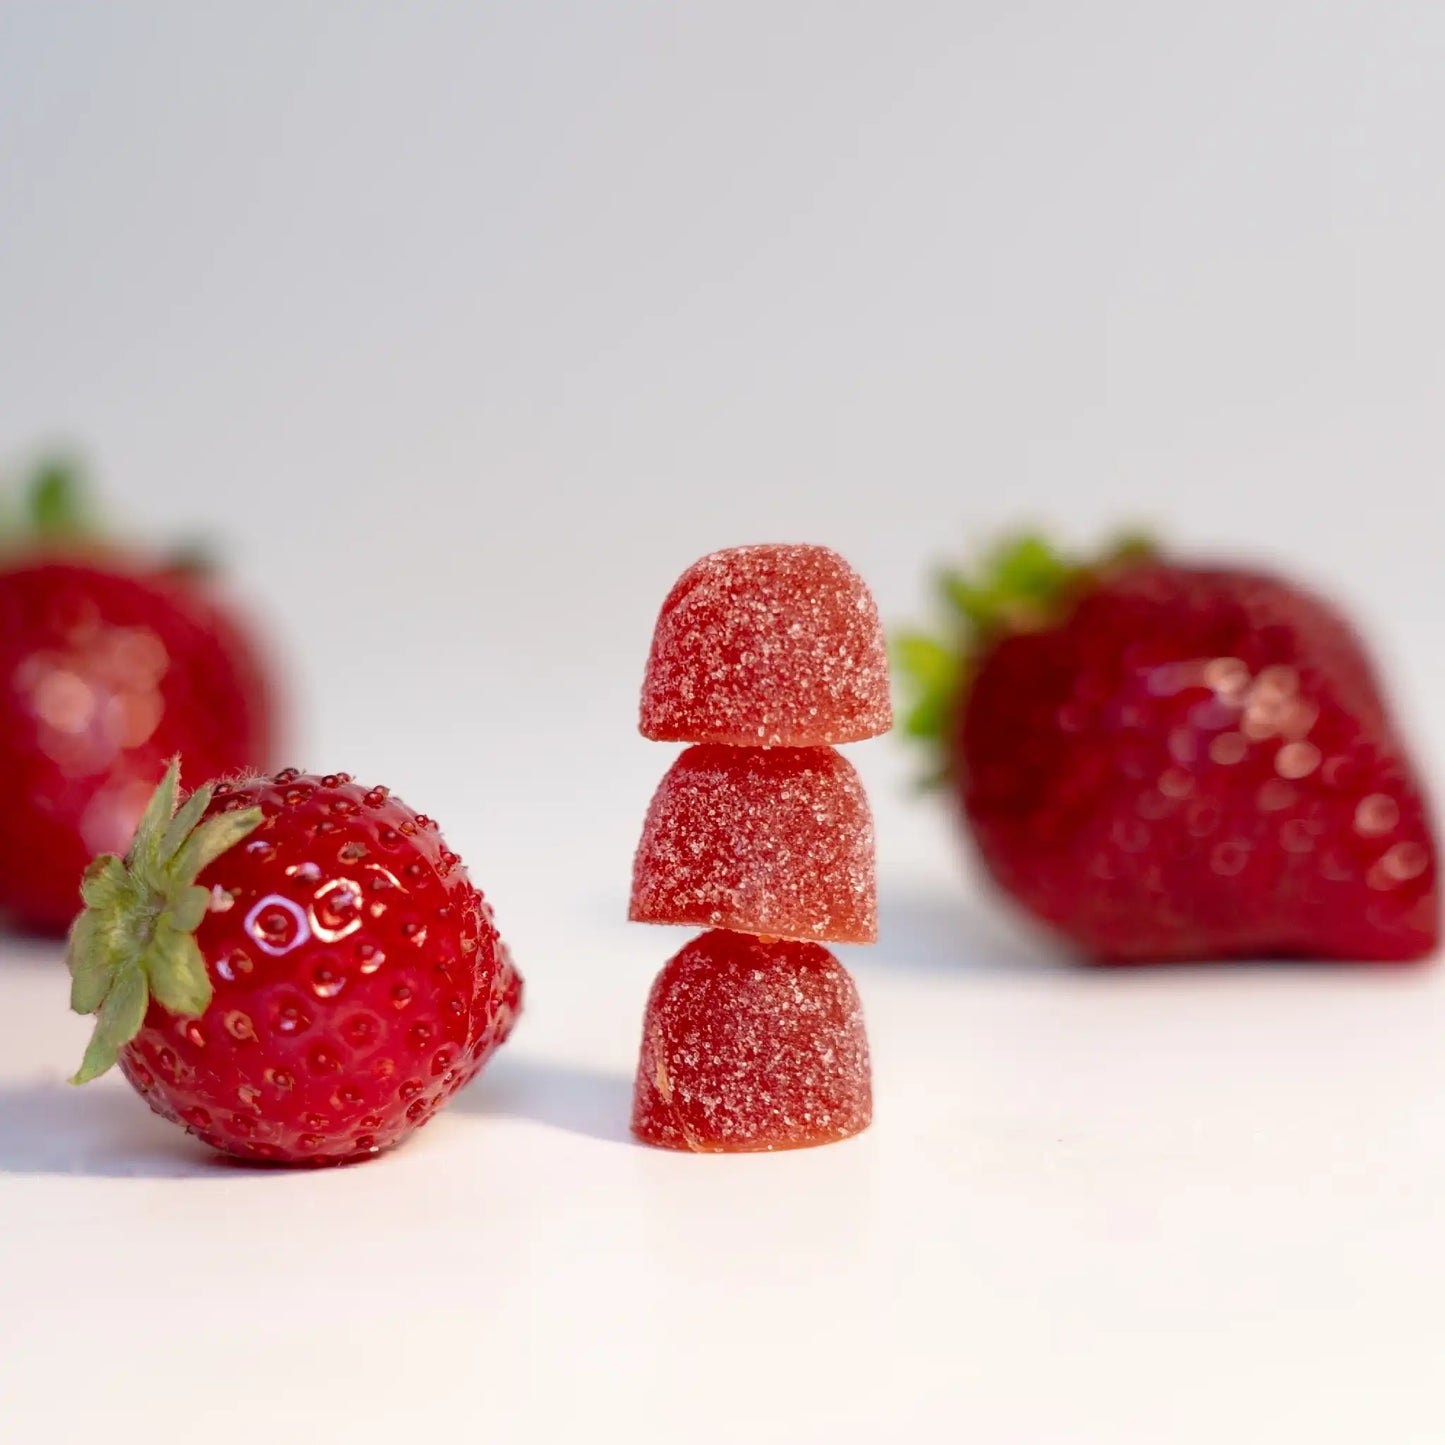 Three CBD gummies with strawberries